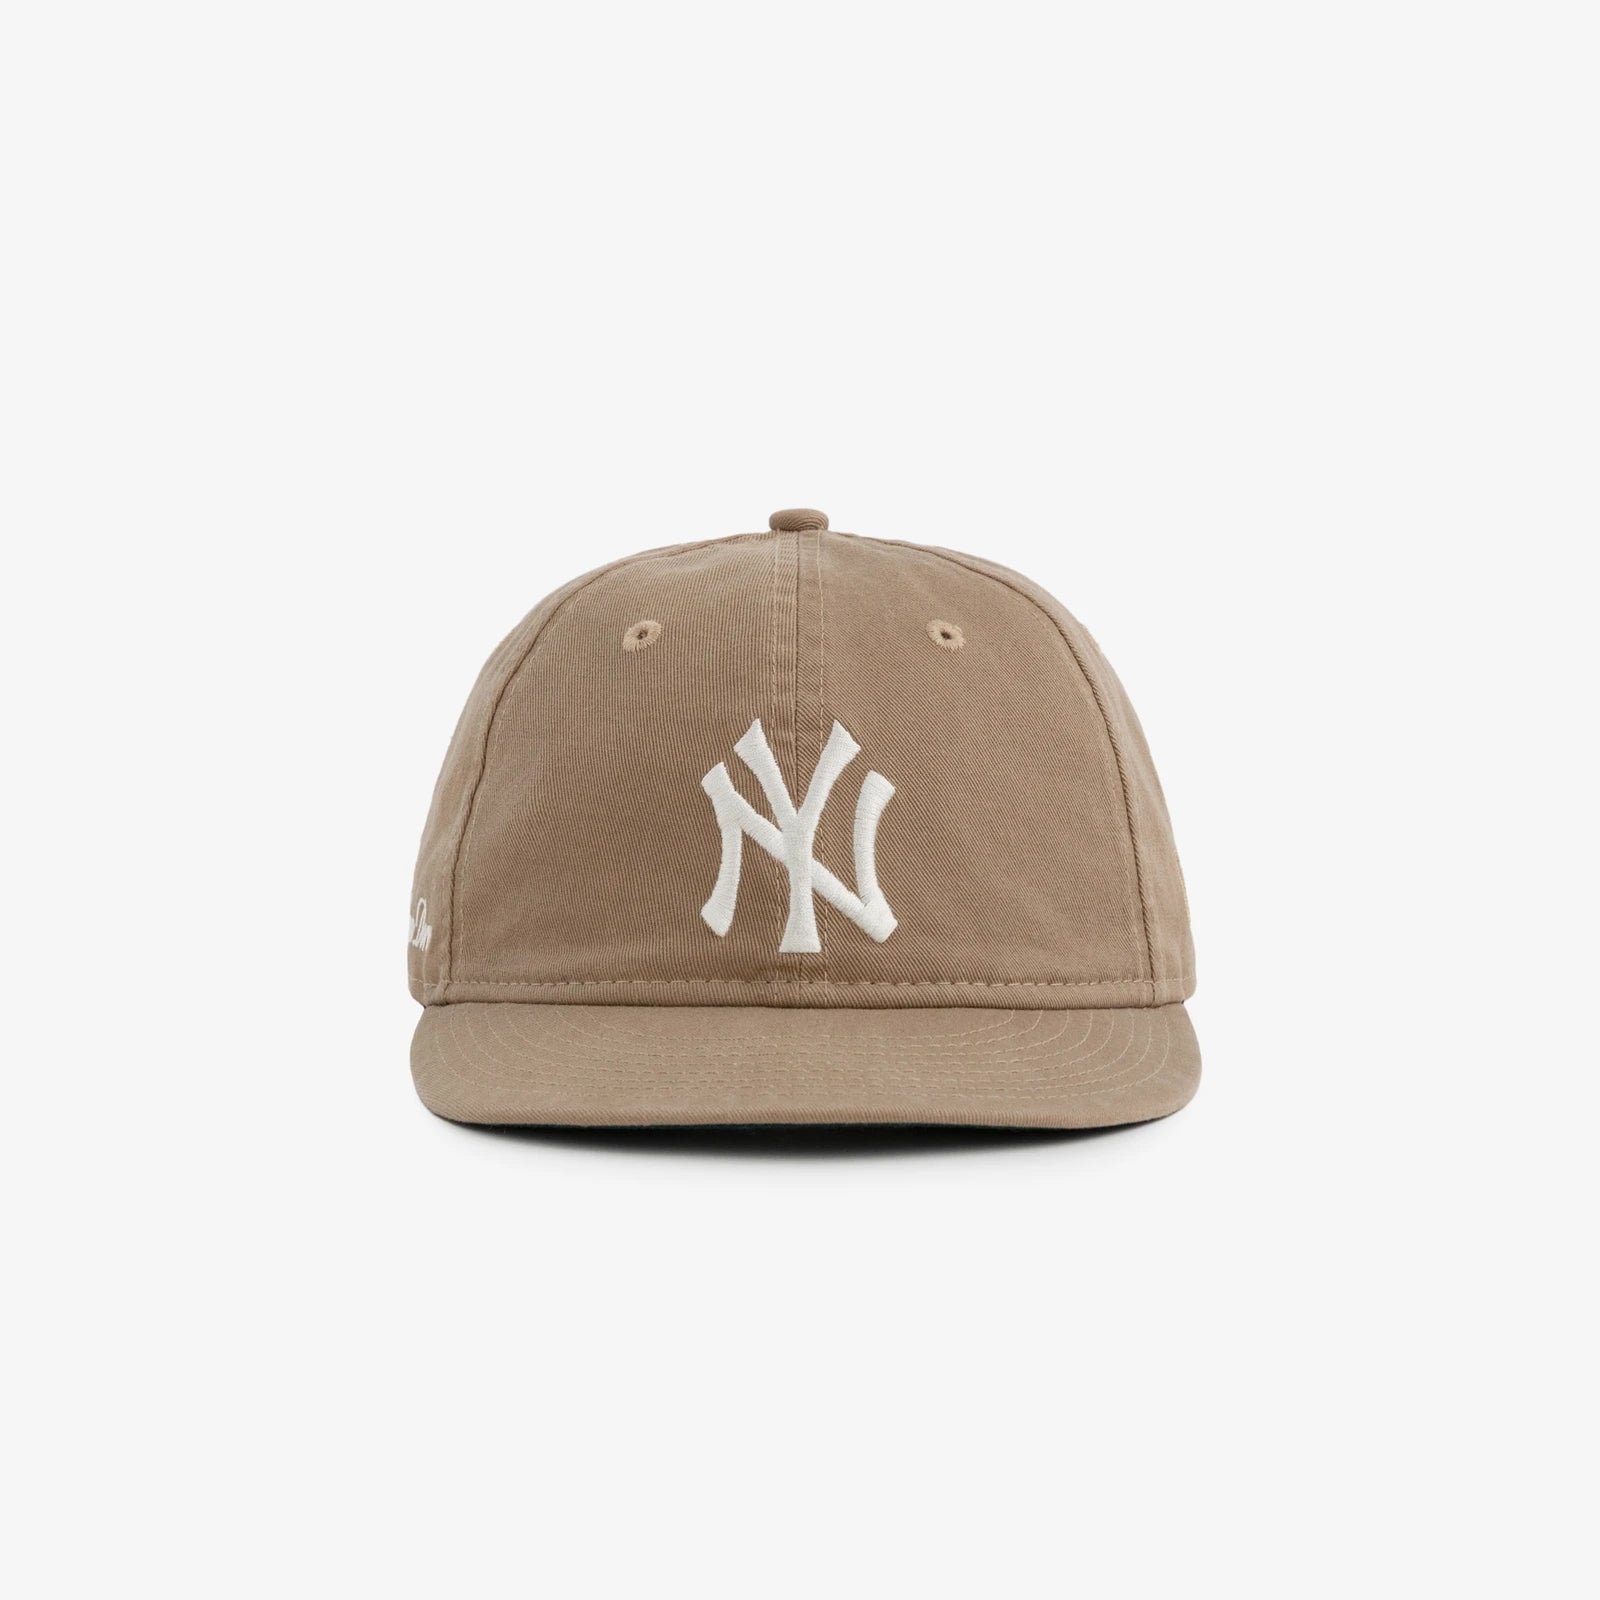 20%OFFALD New Era Washed Chino Yankees Hat 帽子